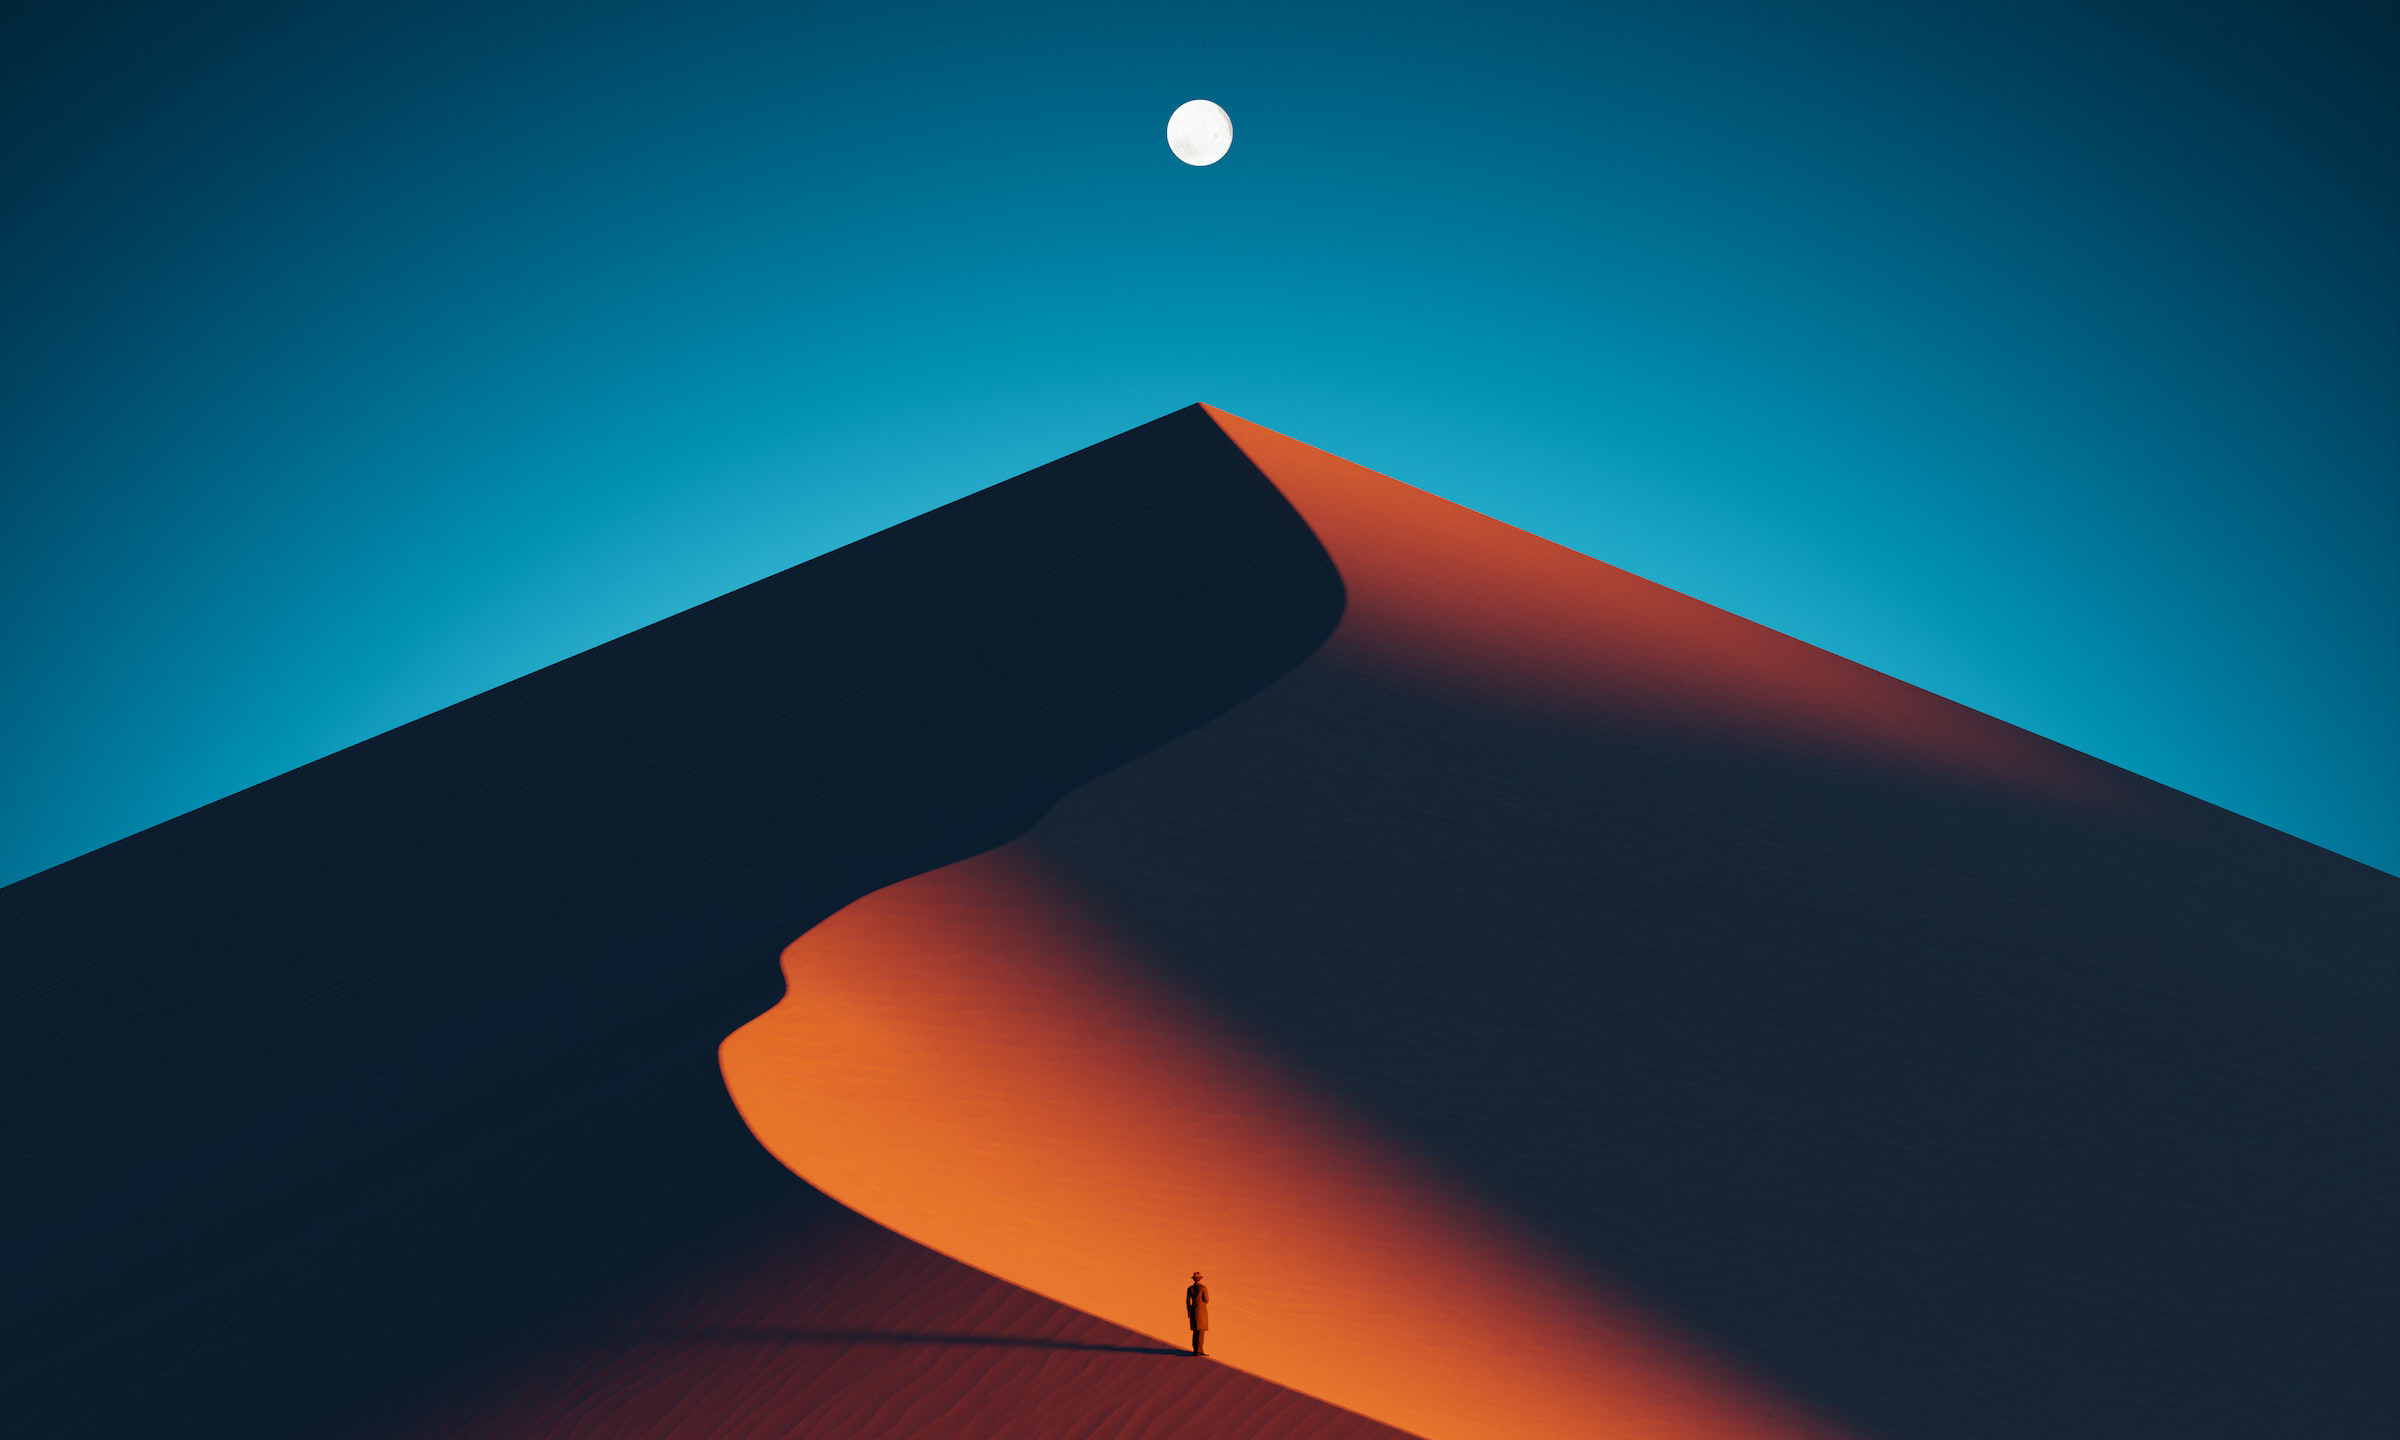 General 2400x1440 digital art artwork illustration dunes desert landscape sand night nightscape nature Moon simple background minimalism sunset sunset glow